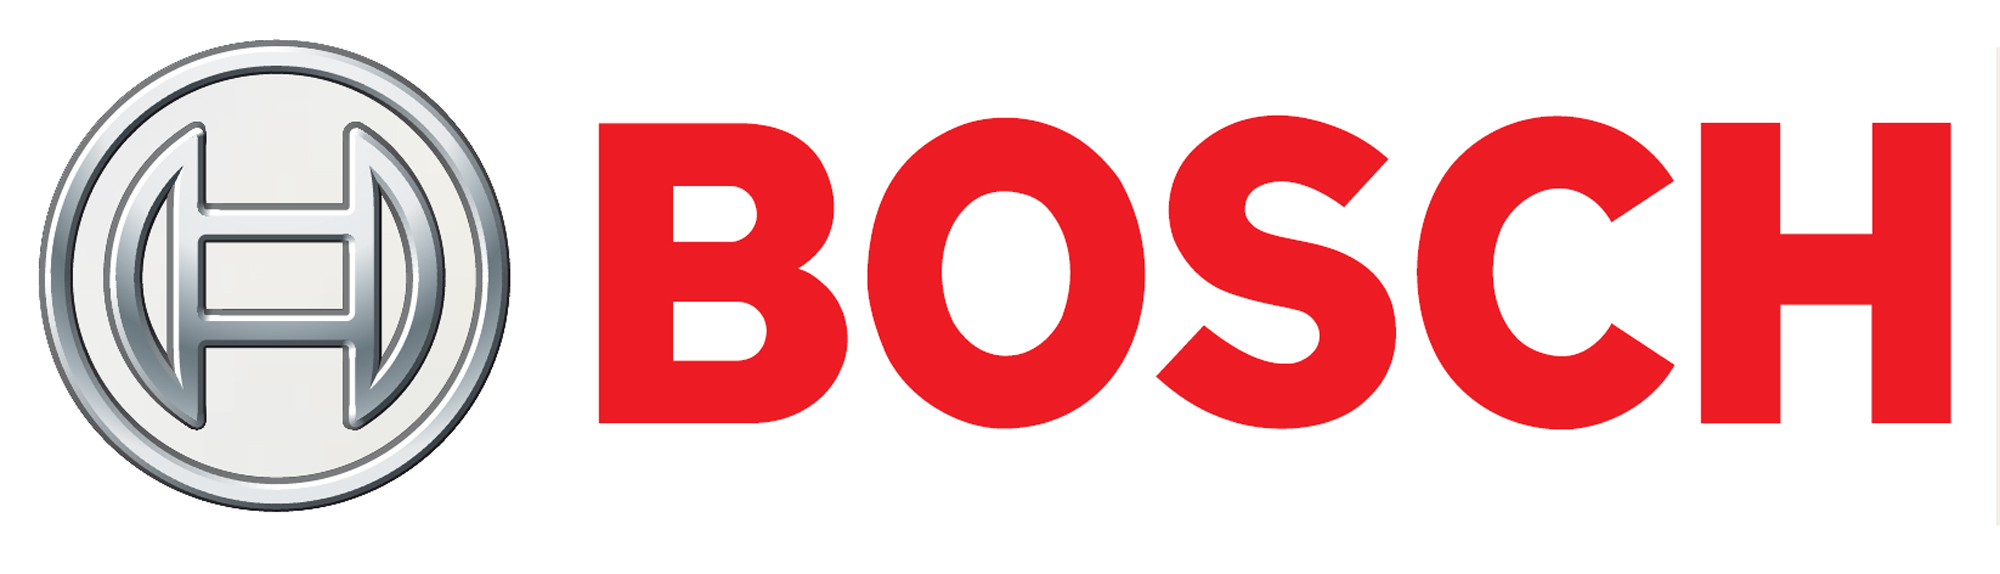 L'HERMITAGE AUTO - logo Bosch